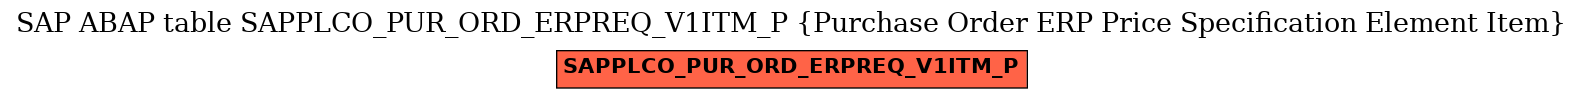 E-R Diagram for table SAPPLCO_PUR_ORD_ERPREQ_V1ITM_P (Purchase Order ERP Price Specification Element Item)